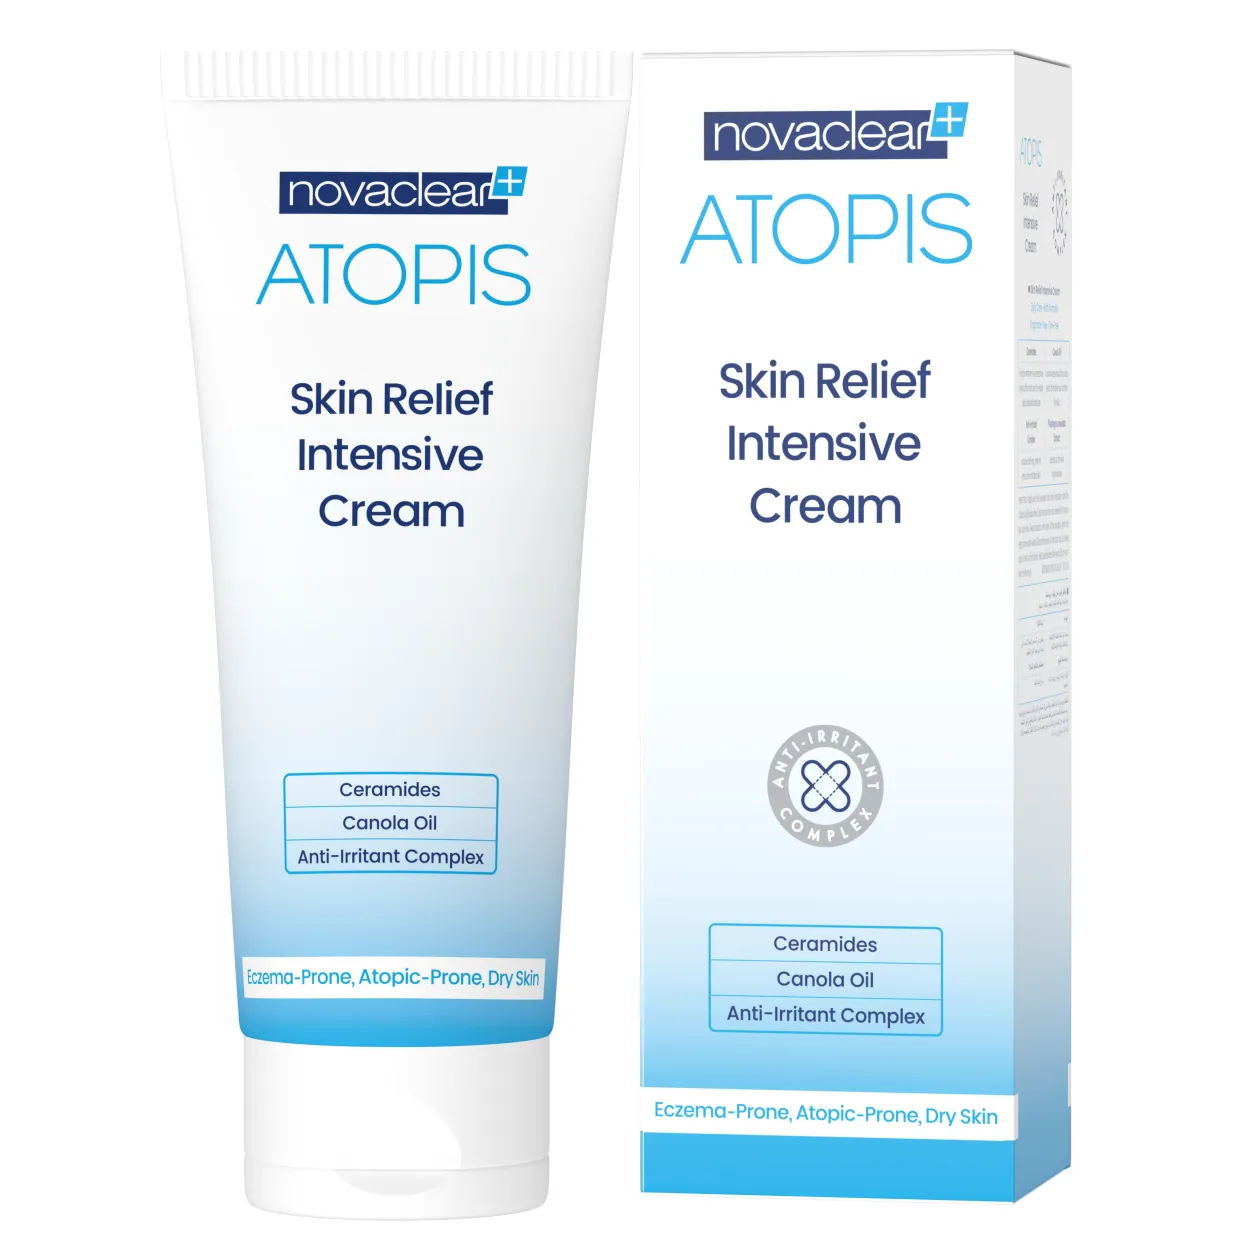 novaclear-atopis-skin-relief-intensive-cream-box-